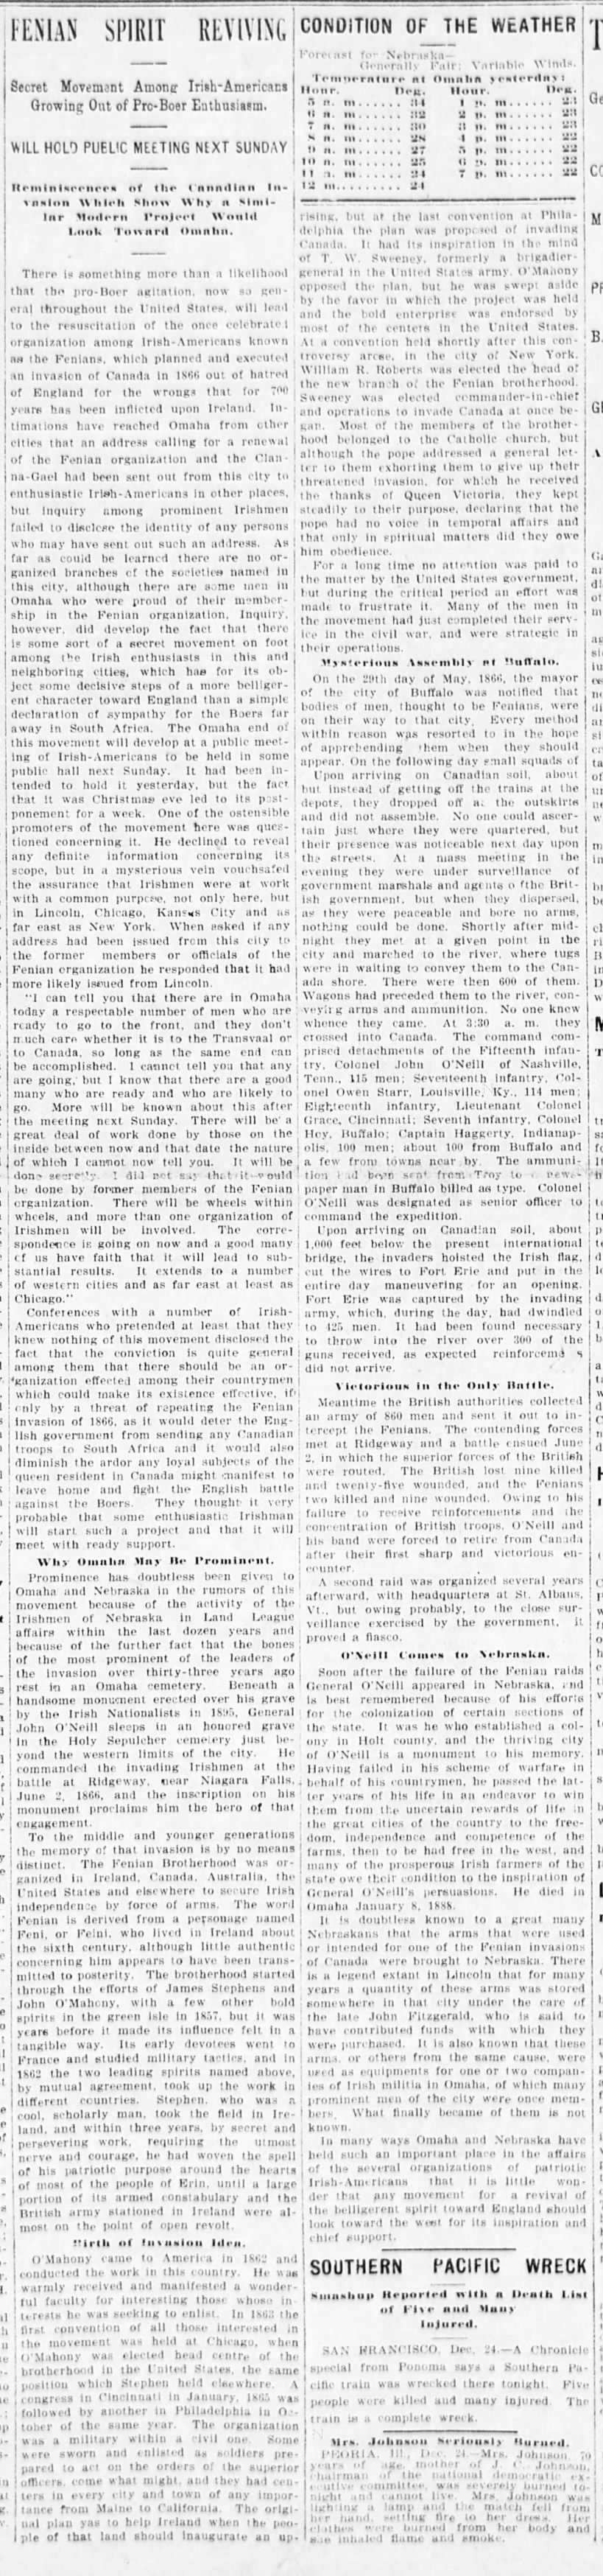 Omaha Daily Bee, Dec. 25, 1899, p 1